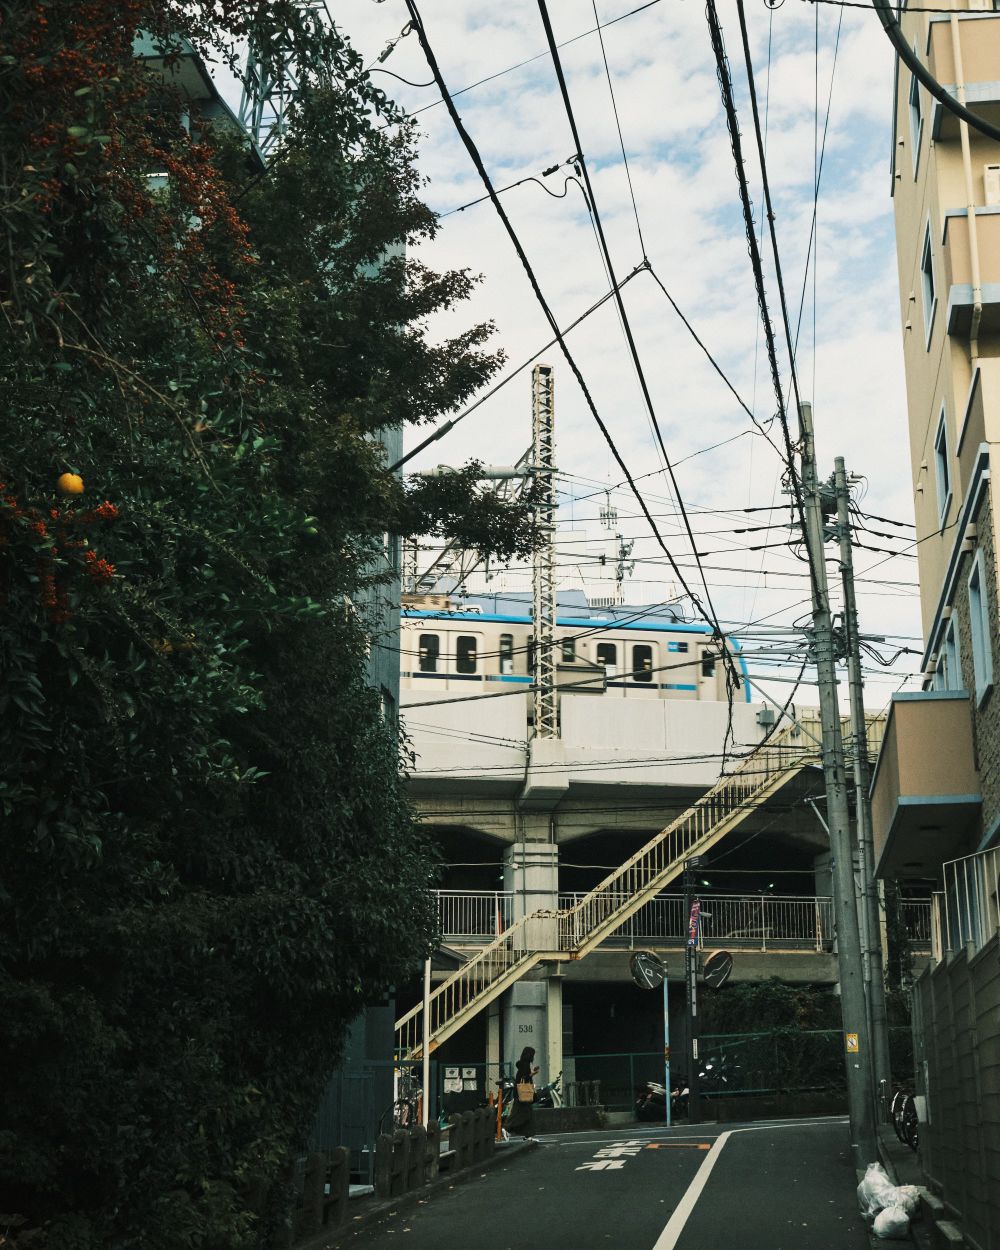 
Train line near Kichijoji
